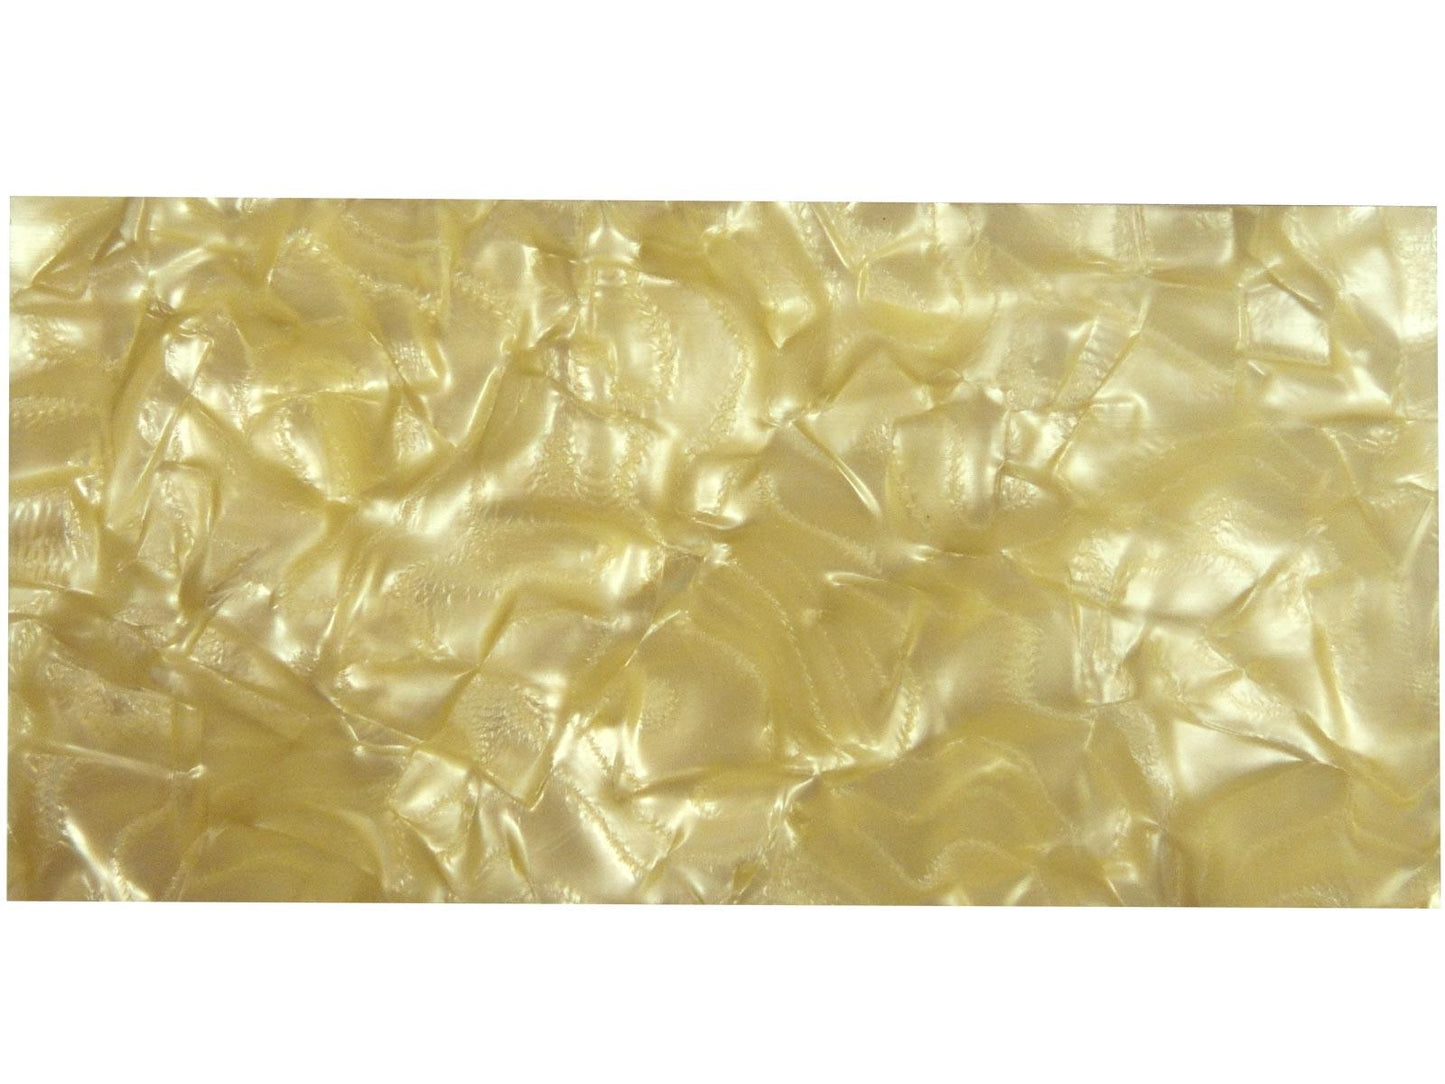 Incudo Cream Large Pattern Pearloid Celluloid Sheet - 200x100x2mm (7.9x3.94x0.08")